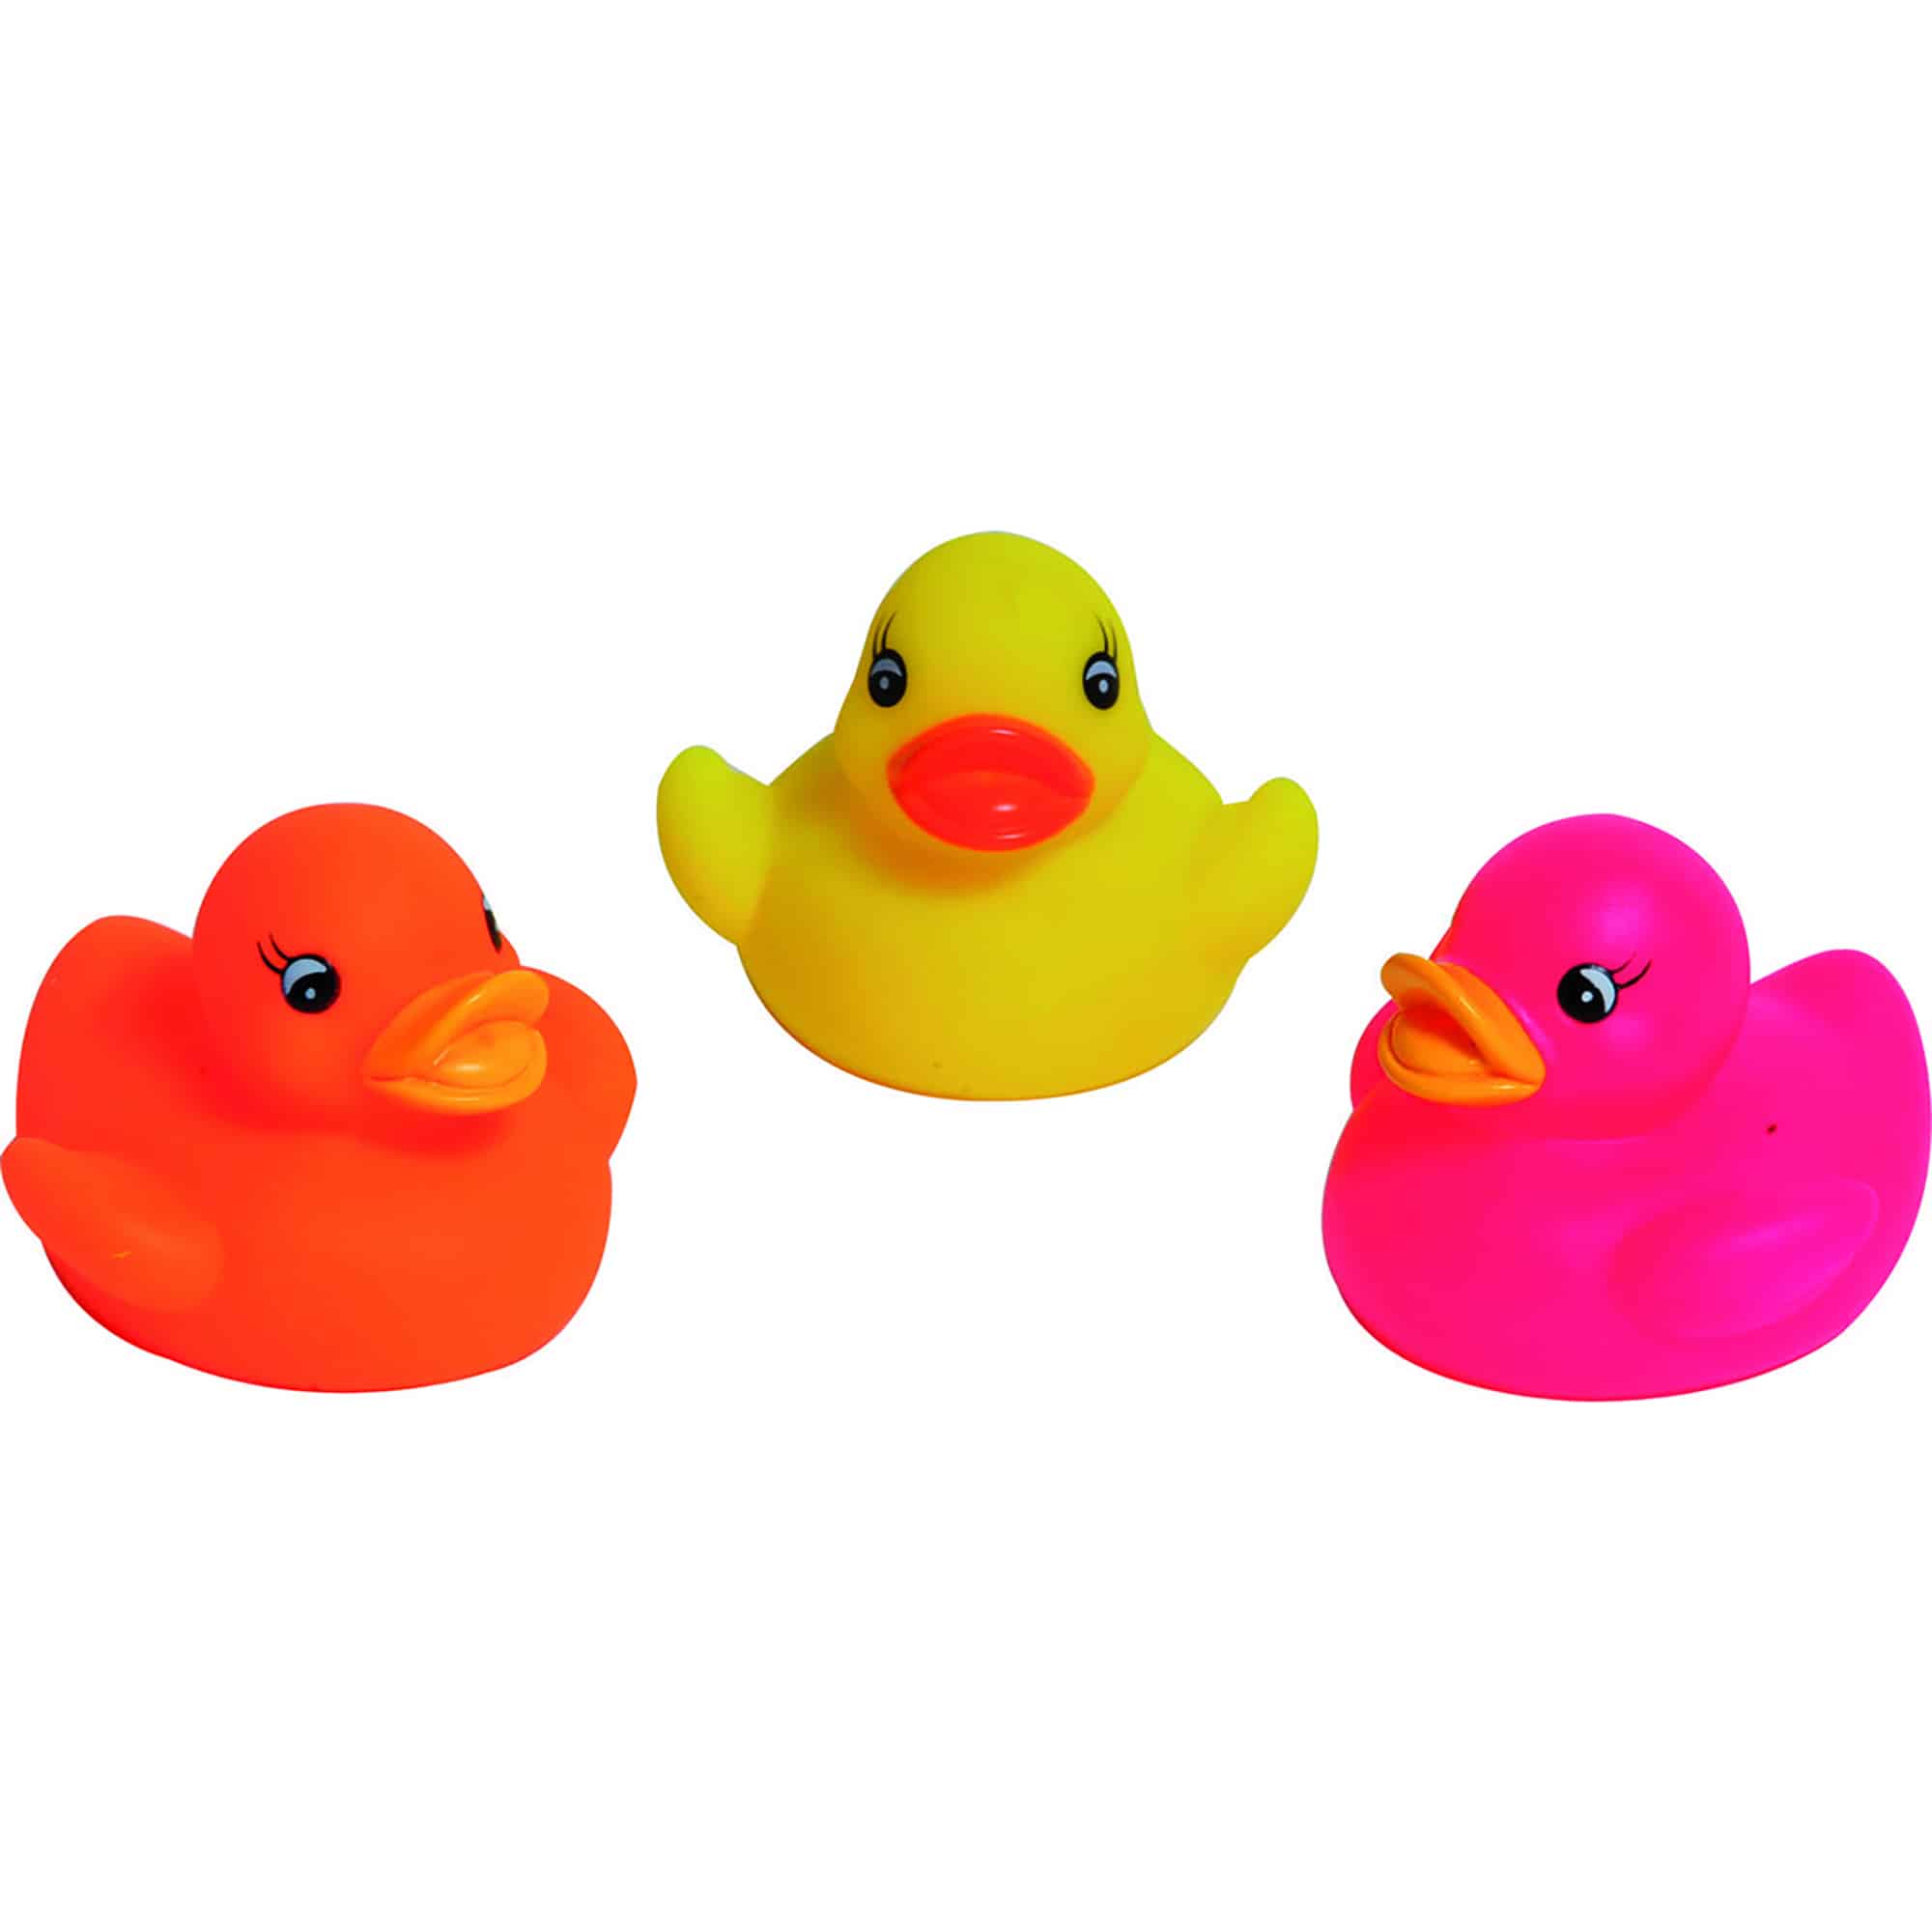 Mini Yellow Rubber Duck Bath Toy Sound Floating Ducks - China Bath